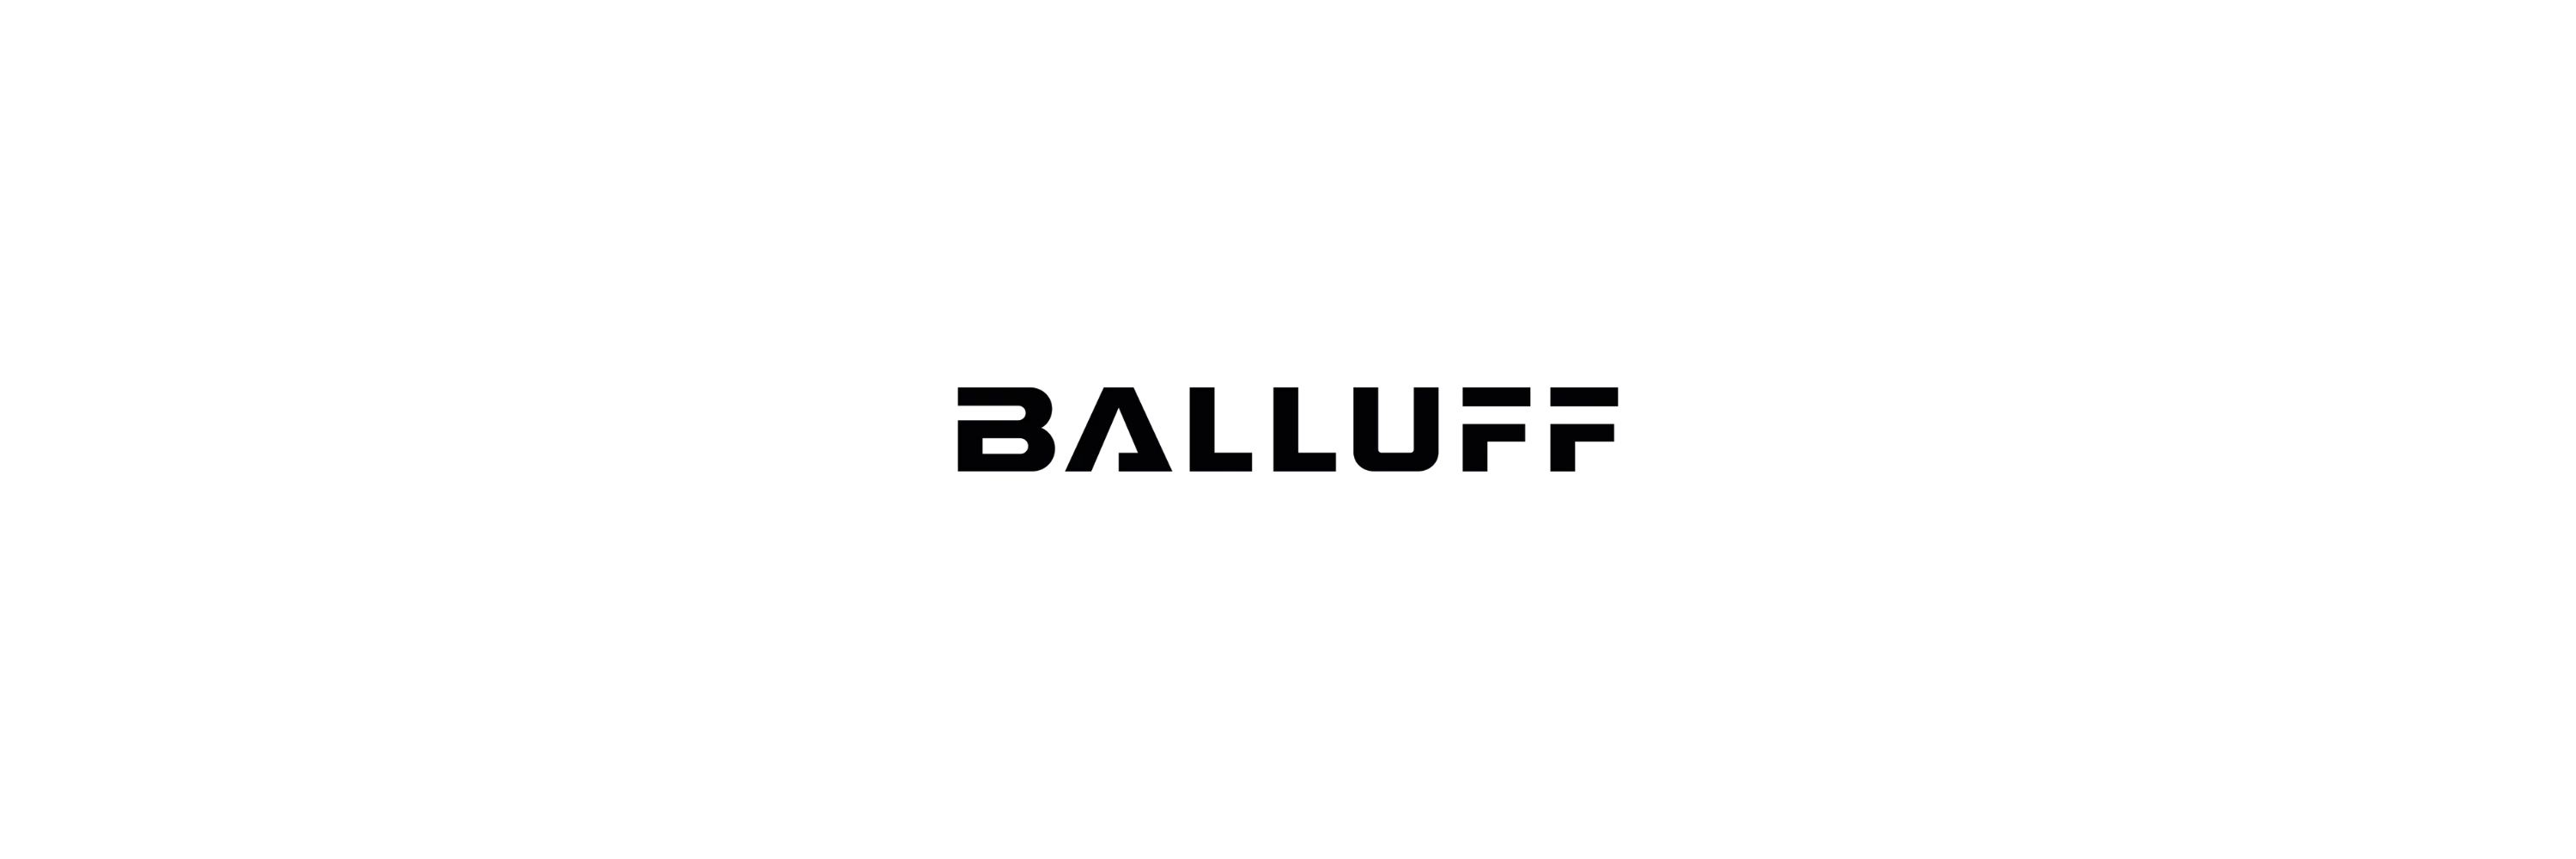 Balluff - Klenk Maschinenhandel